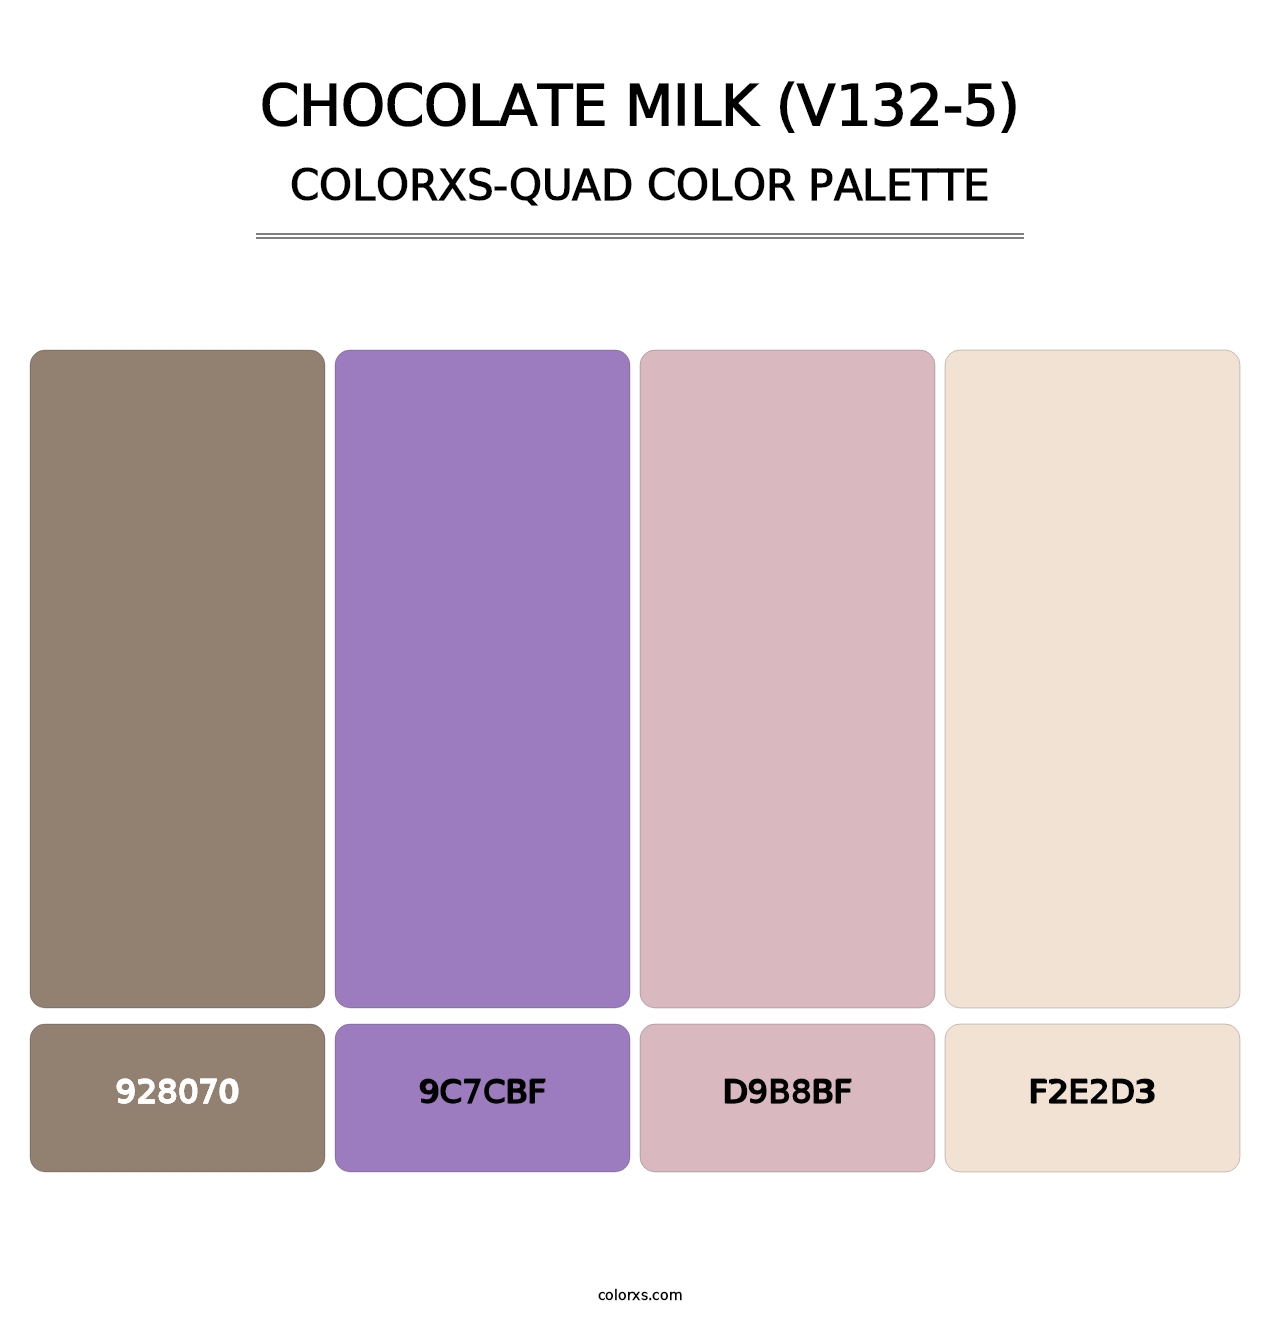 Chocolate Milk (V132-5) - Colorxs Quad Palette